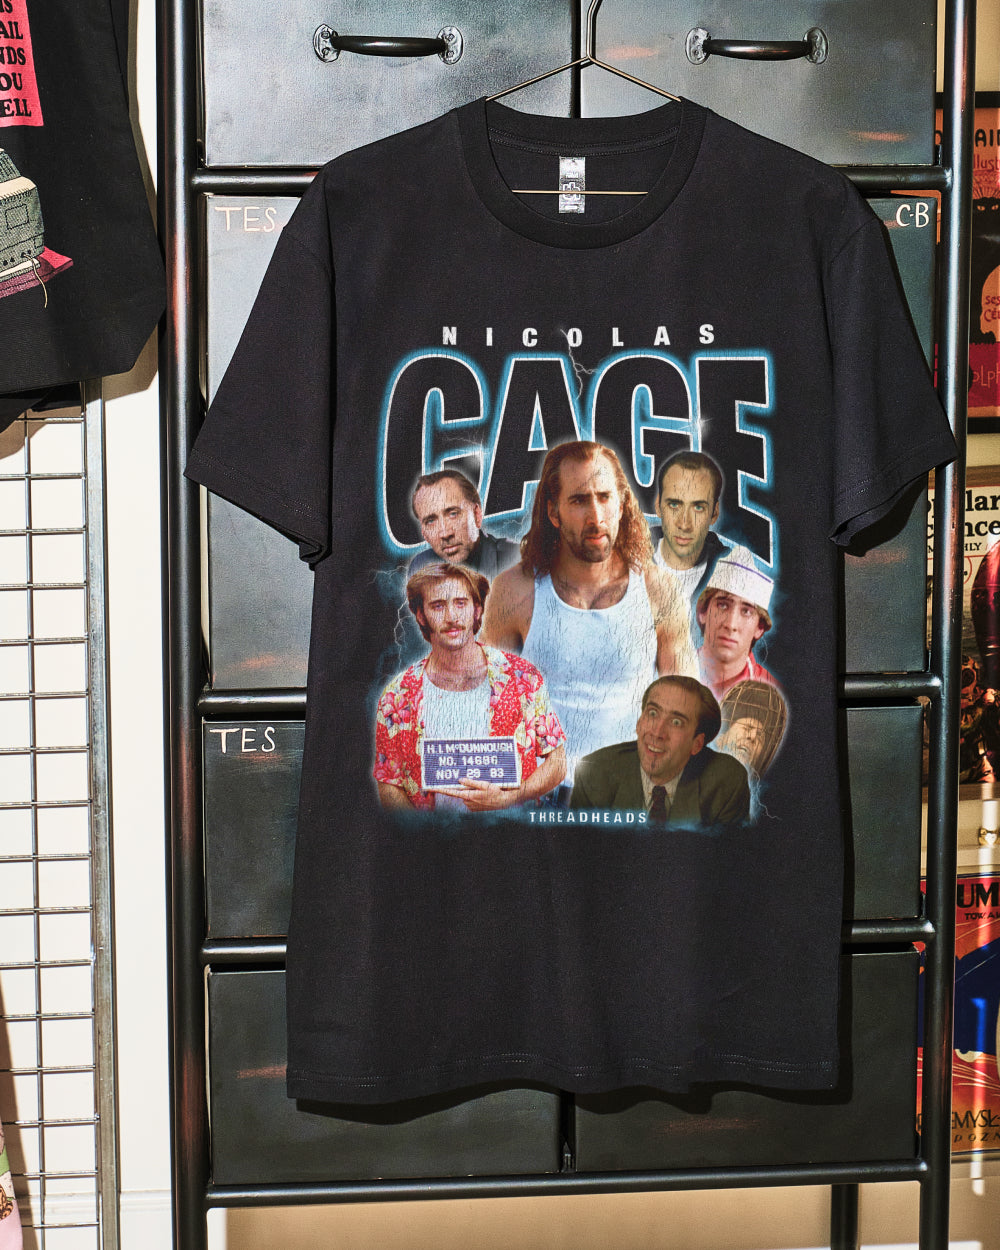 Nic Cage T-Shirt Australia Online